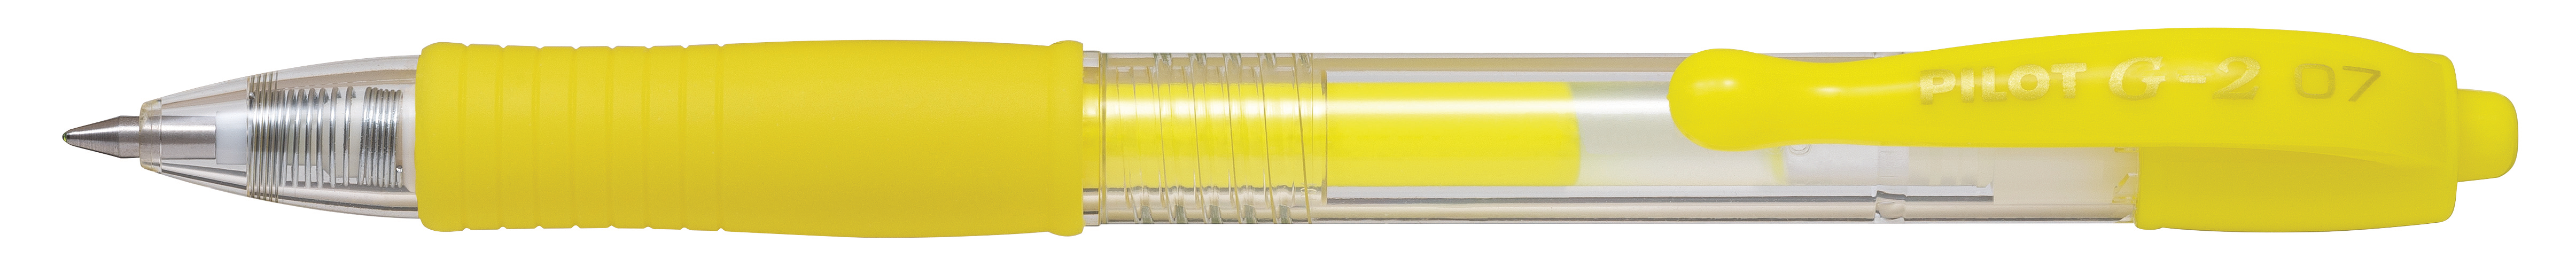 PILOT Gelroller G-2 Neon 0.7mm BL-G2-7-NY jaune